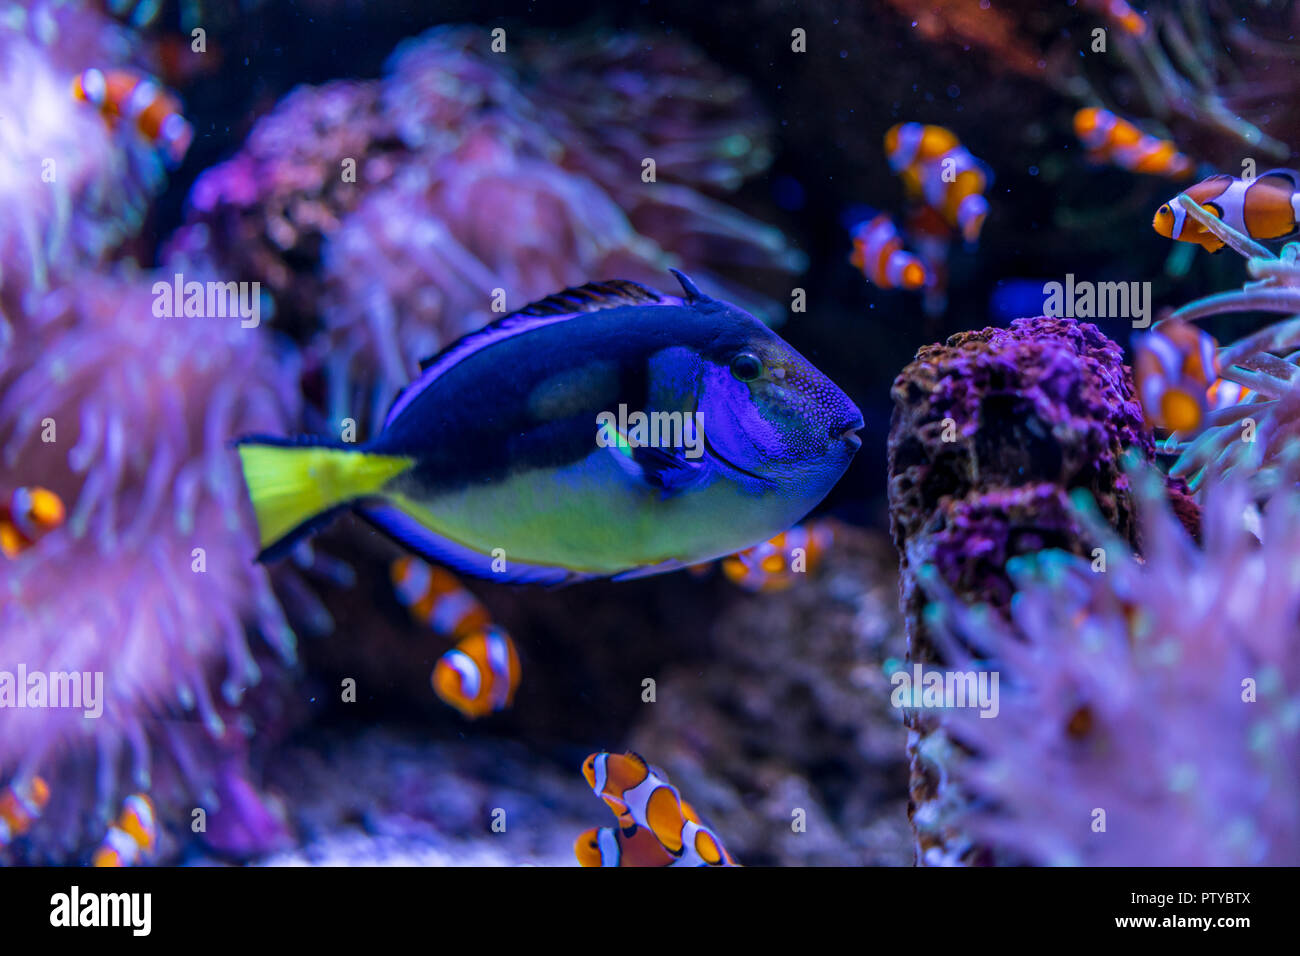 Tropical fish Paracanthurus hepatus among corals. Stock Photo